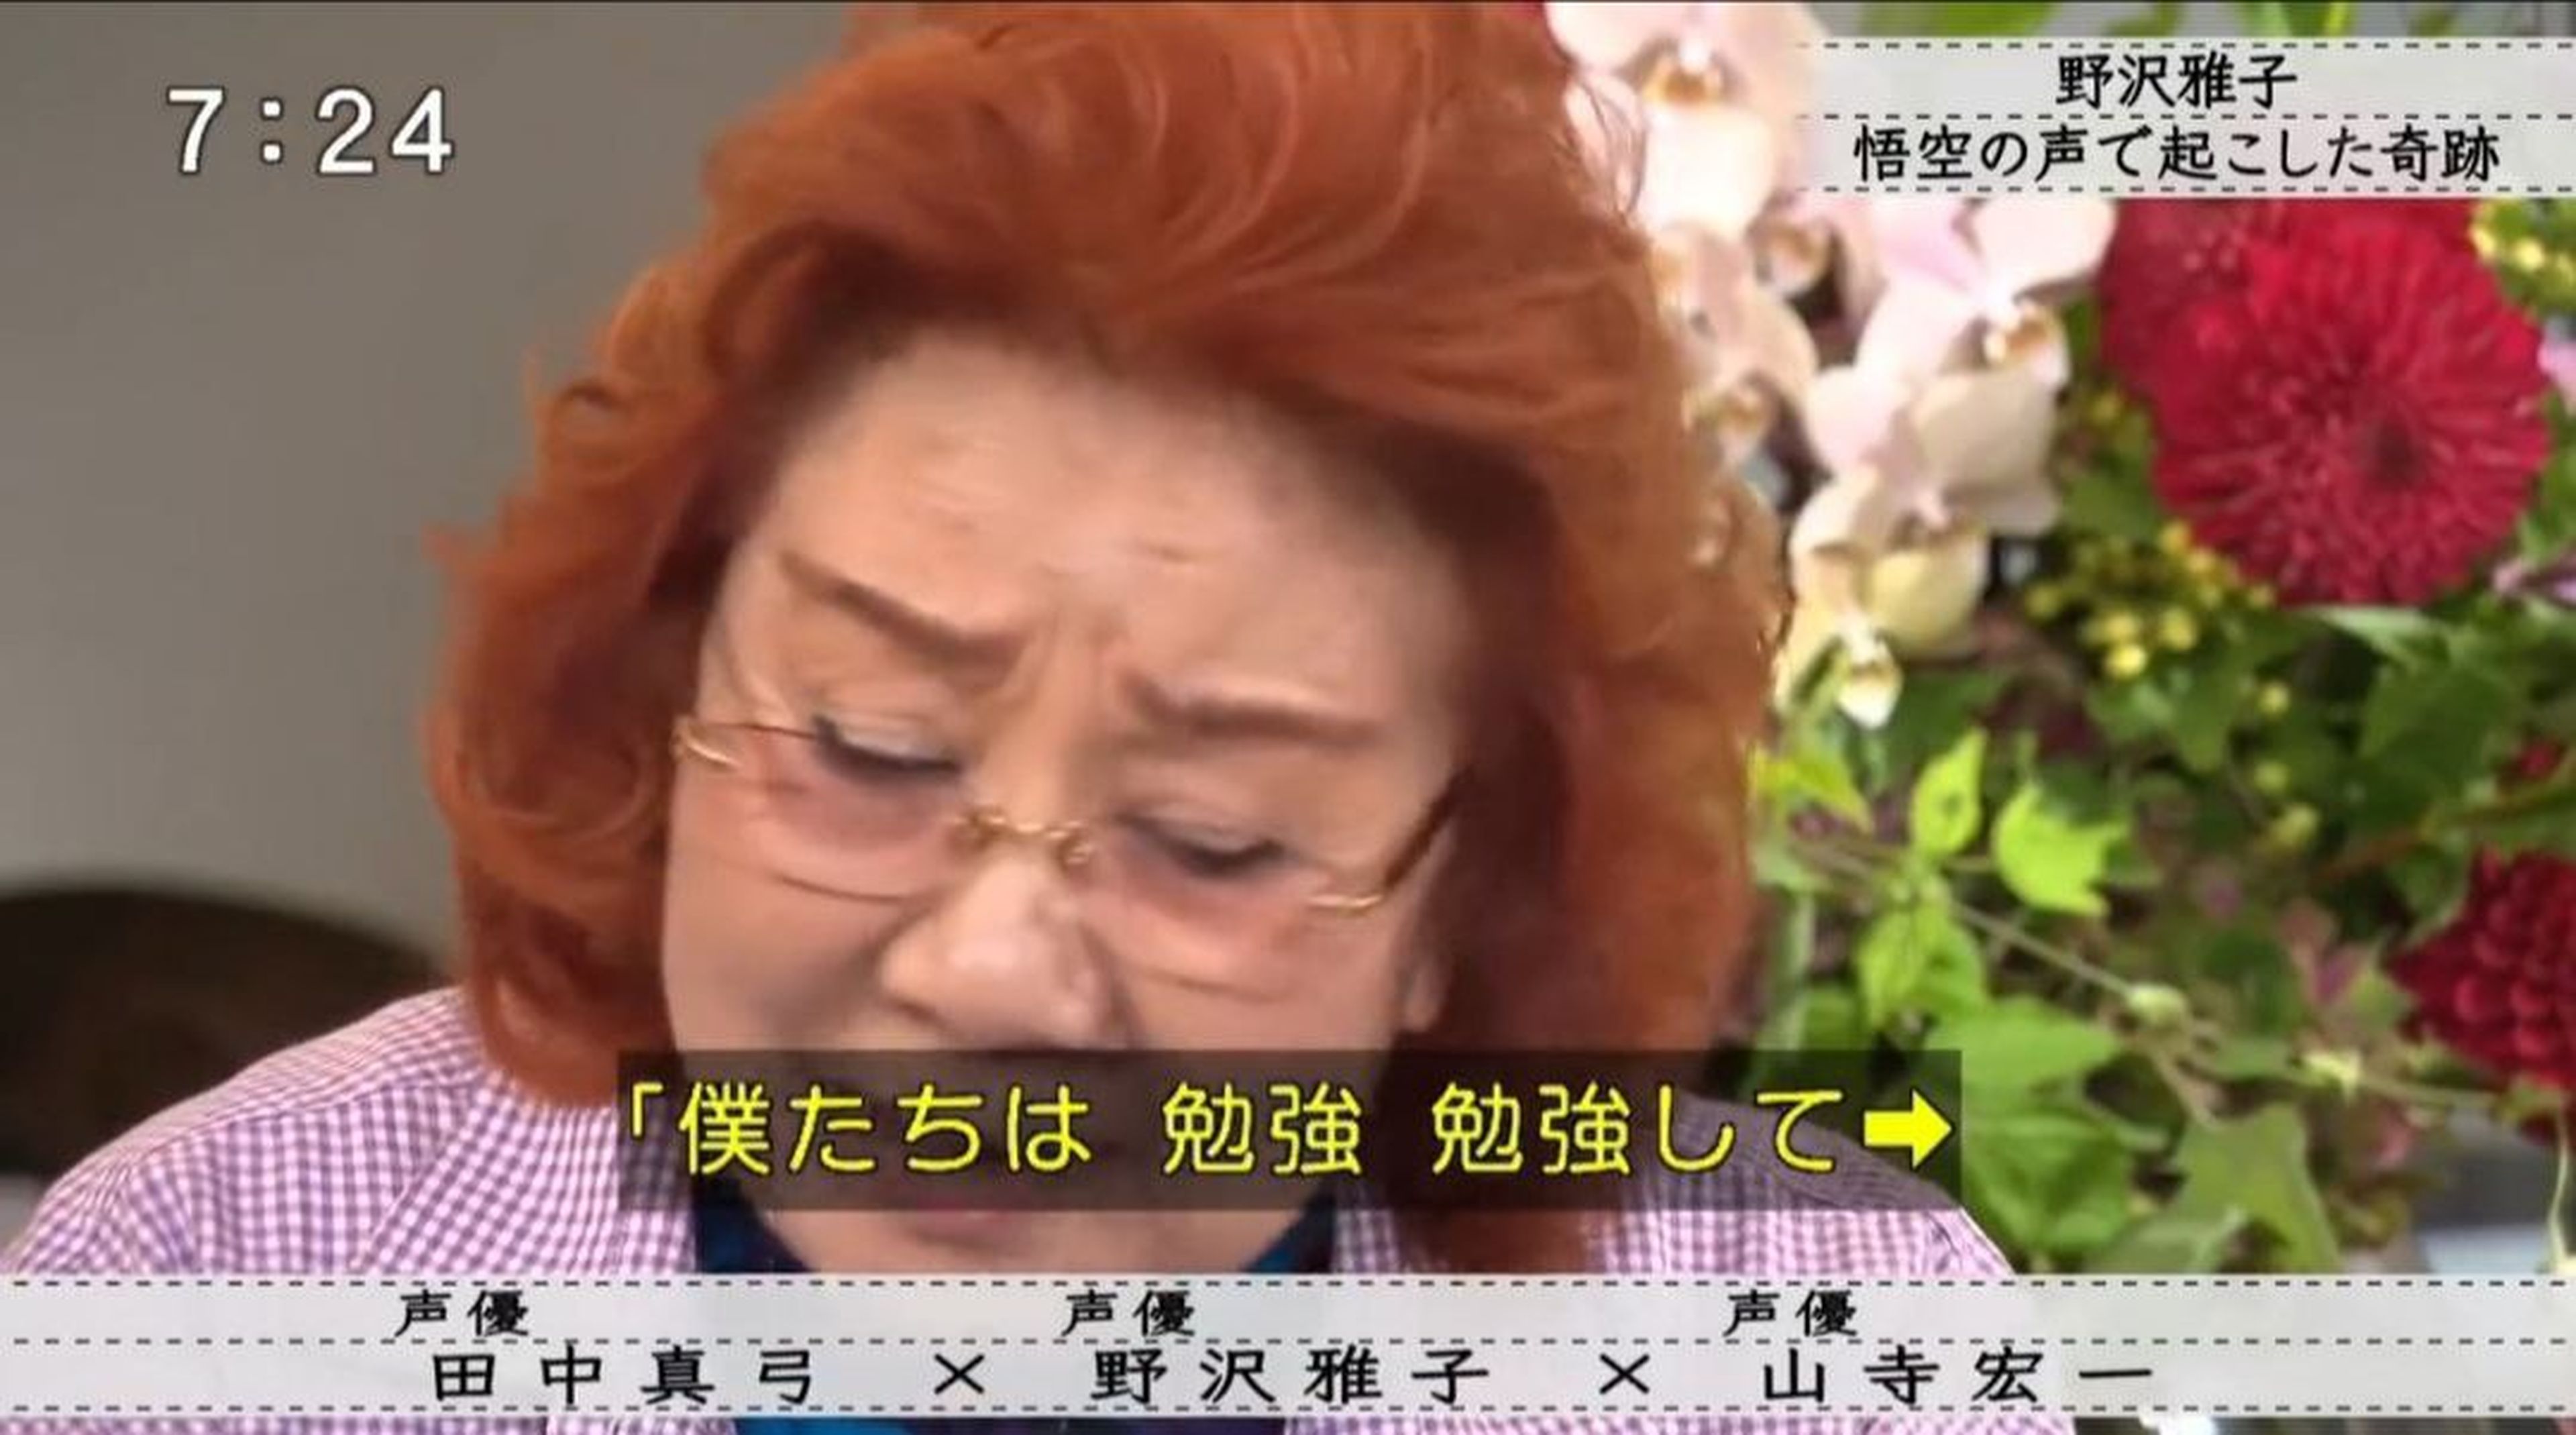 Dragon Ball - Masako Nozawa, la voz de Goku en japonés, hizo feliz a un niño antes de morir